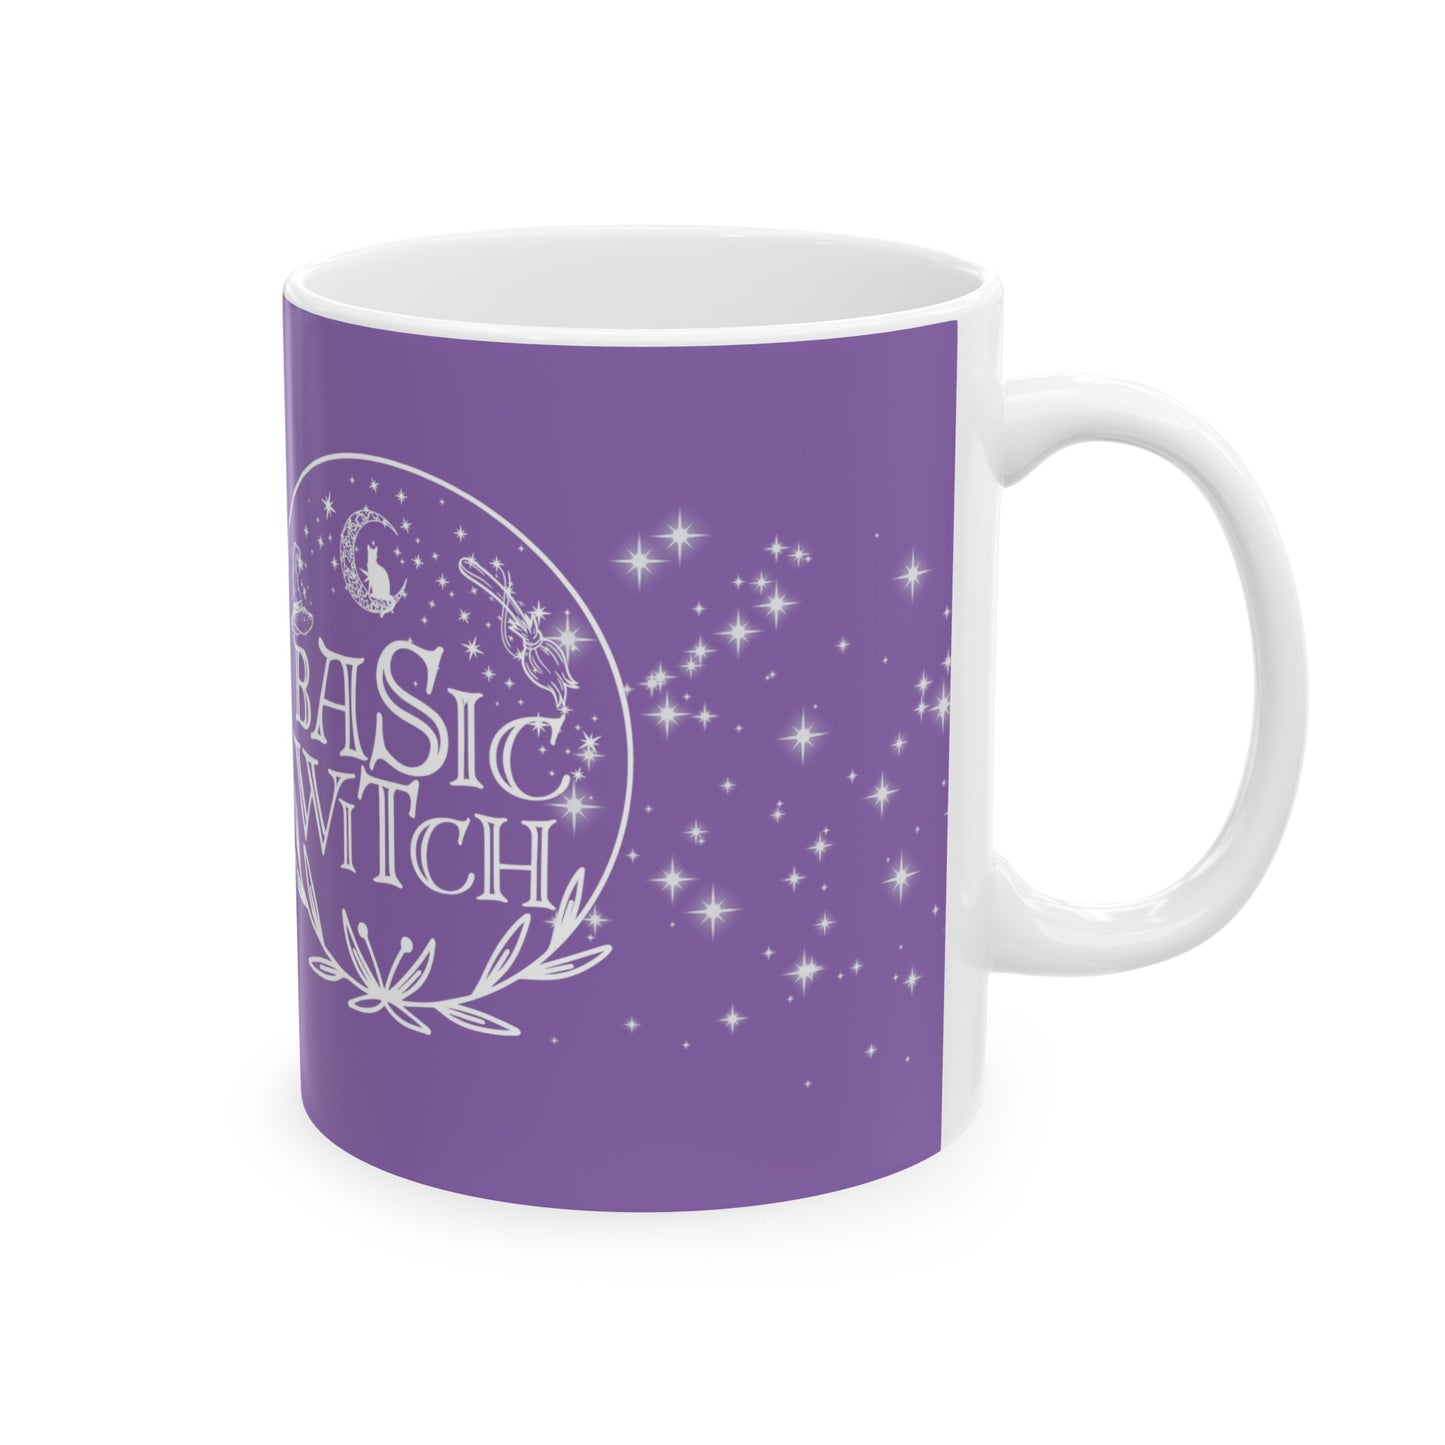 Basic Witch Ceramic Mug - The Witchy Gypsy